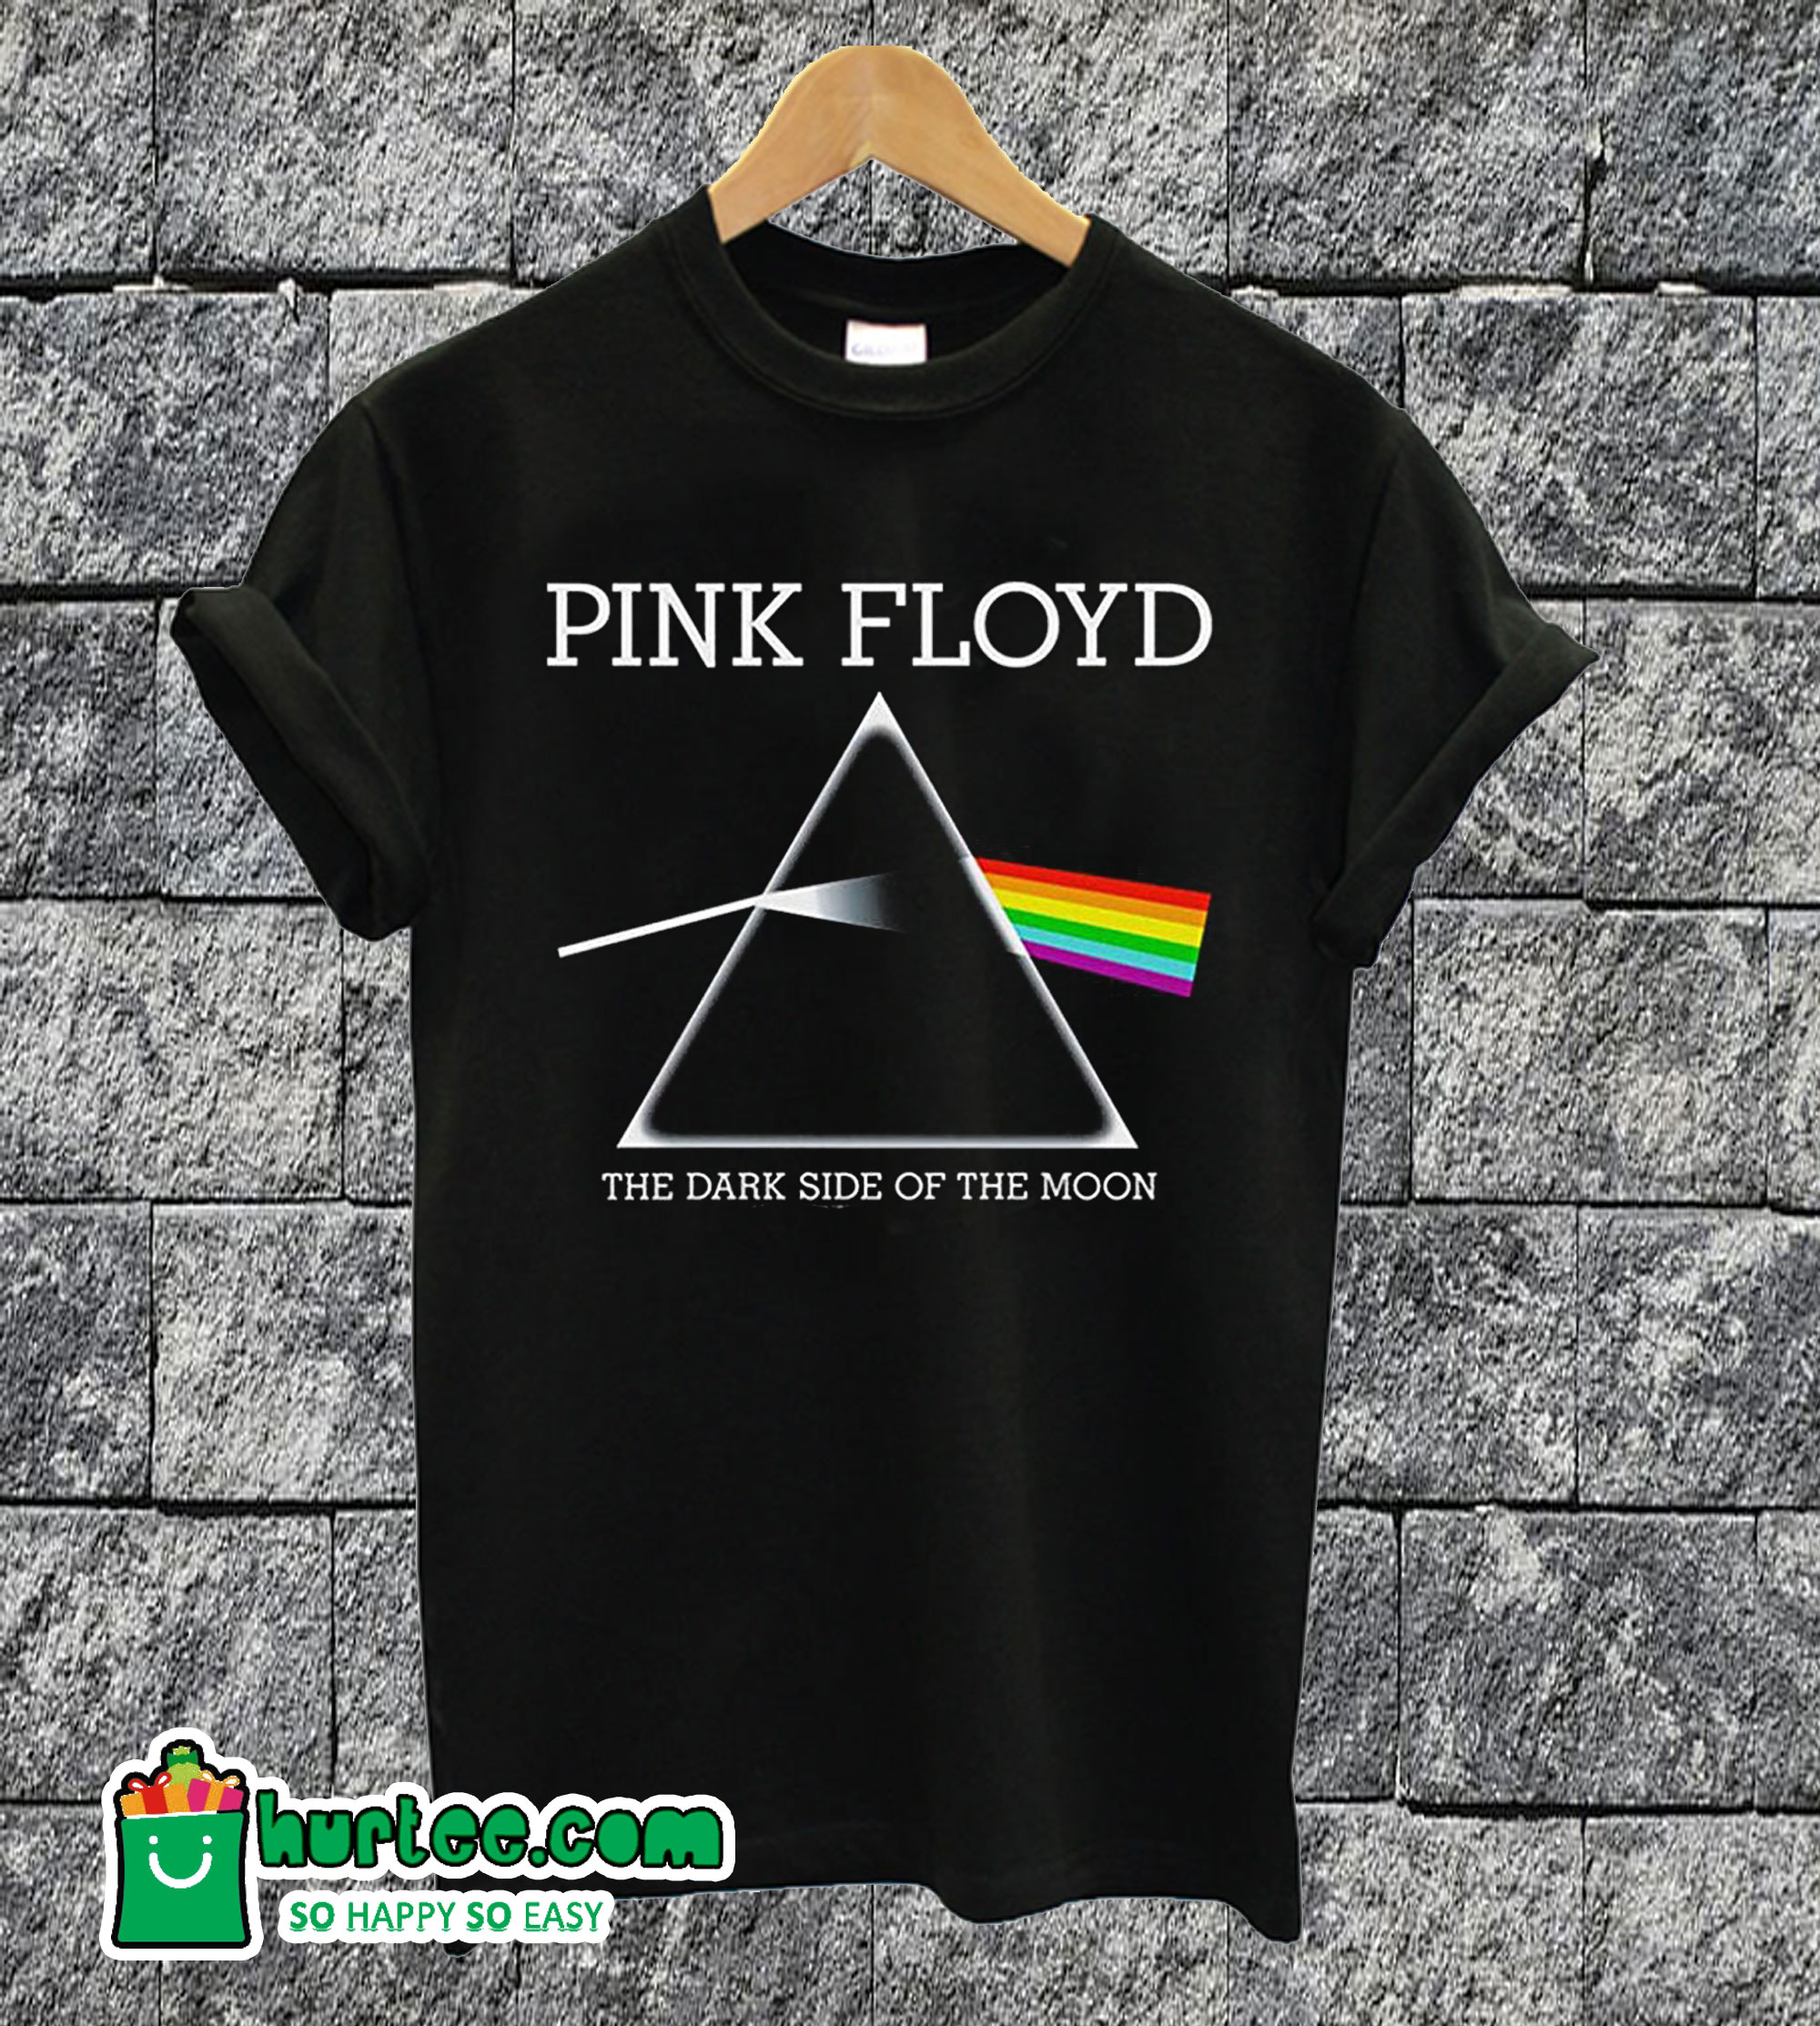 Floyd T-shirt